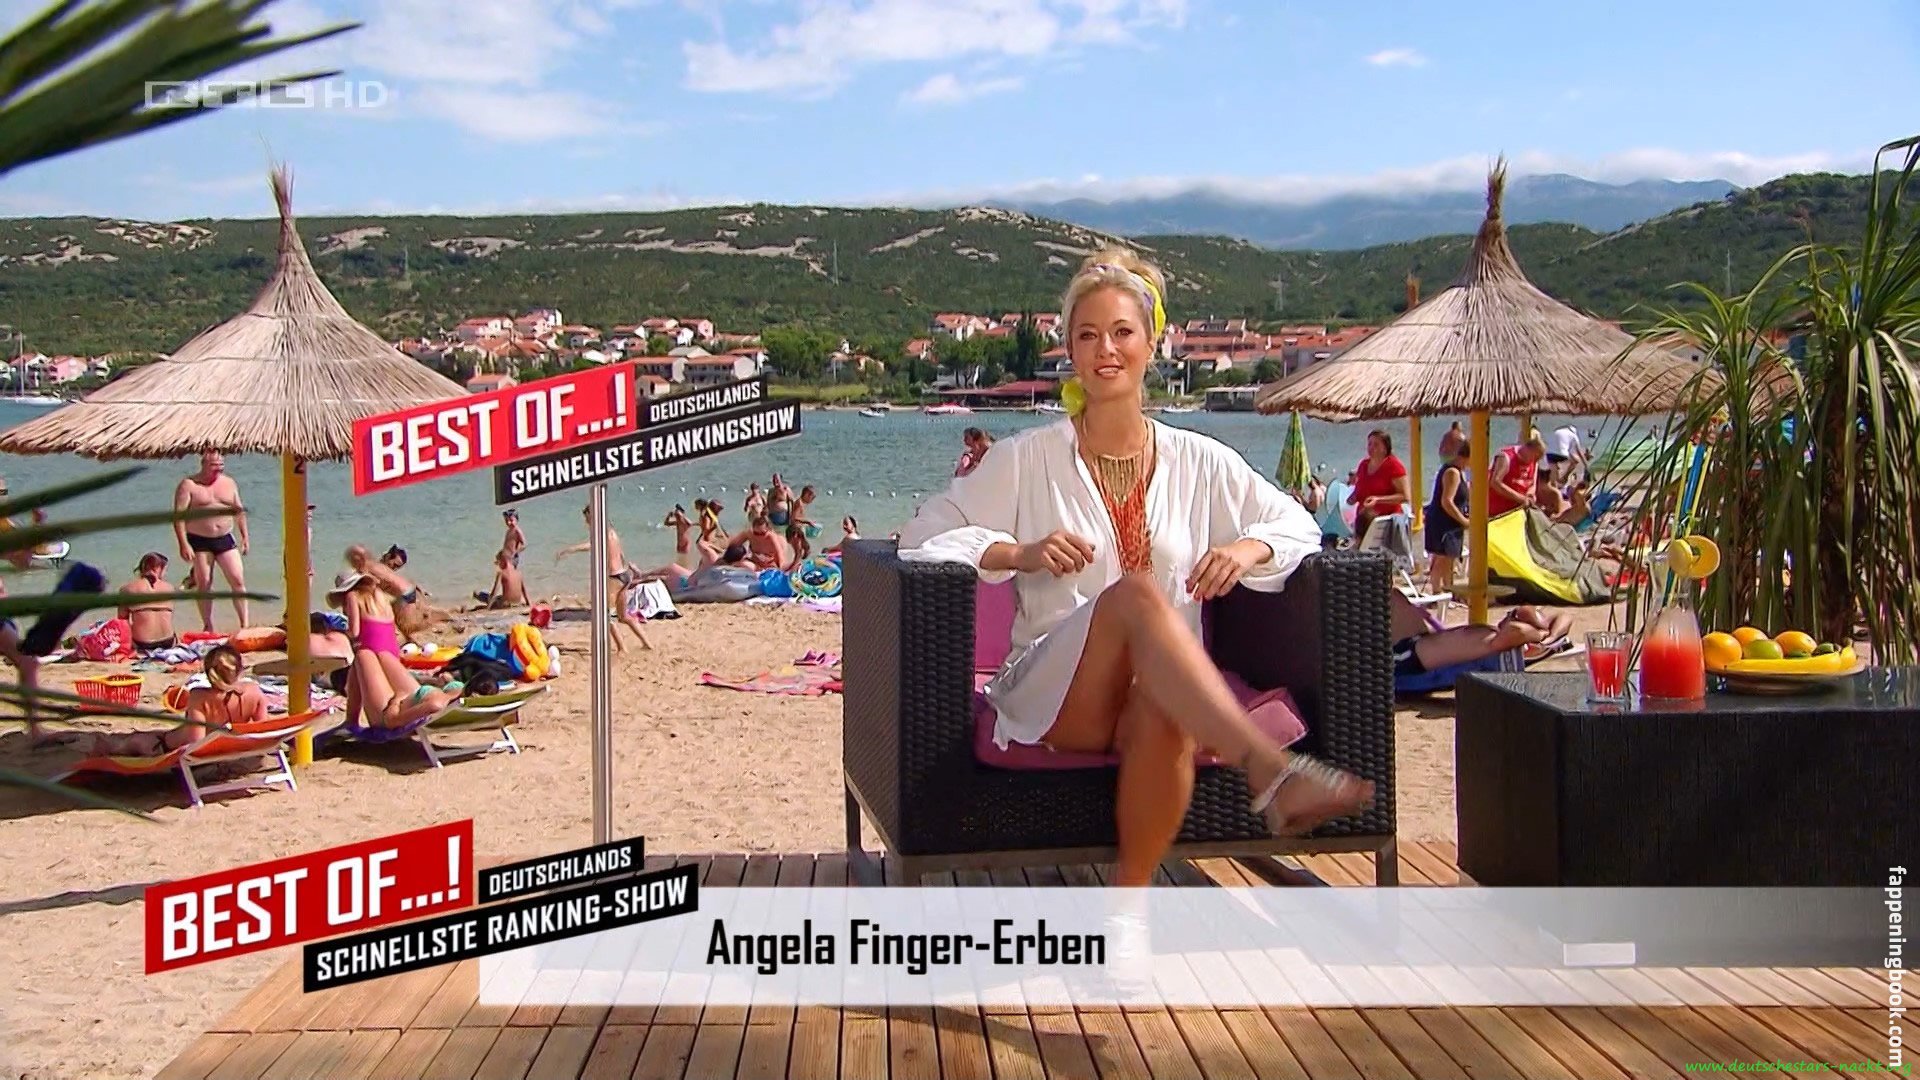 Angela Finger-Erben Nude